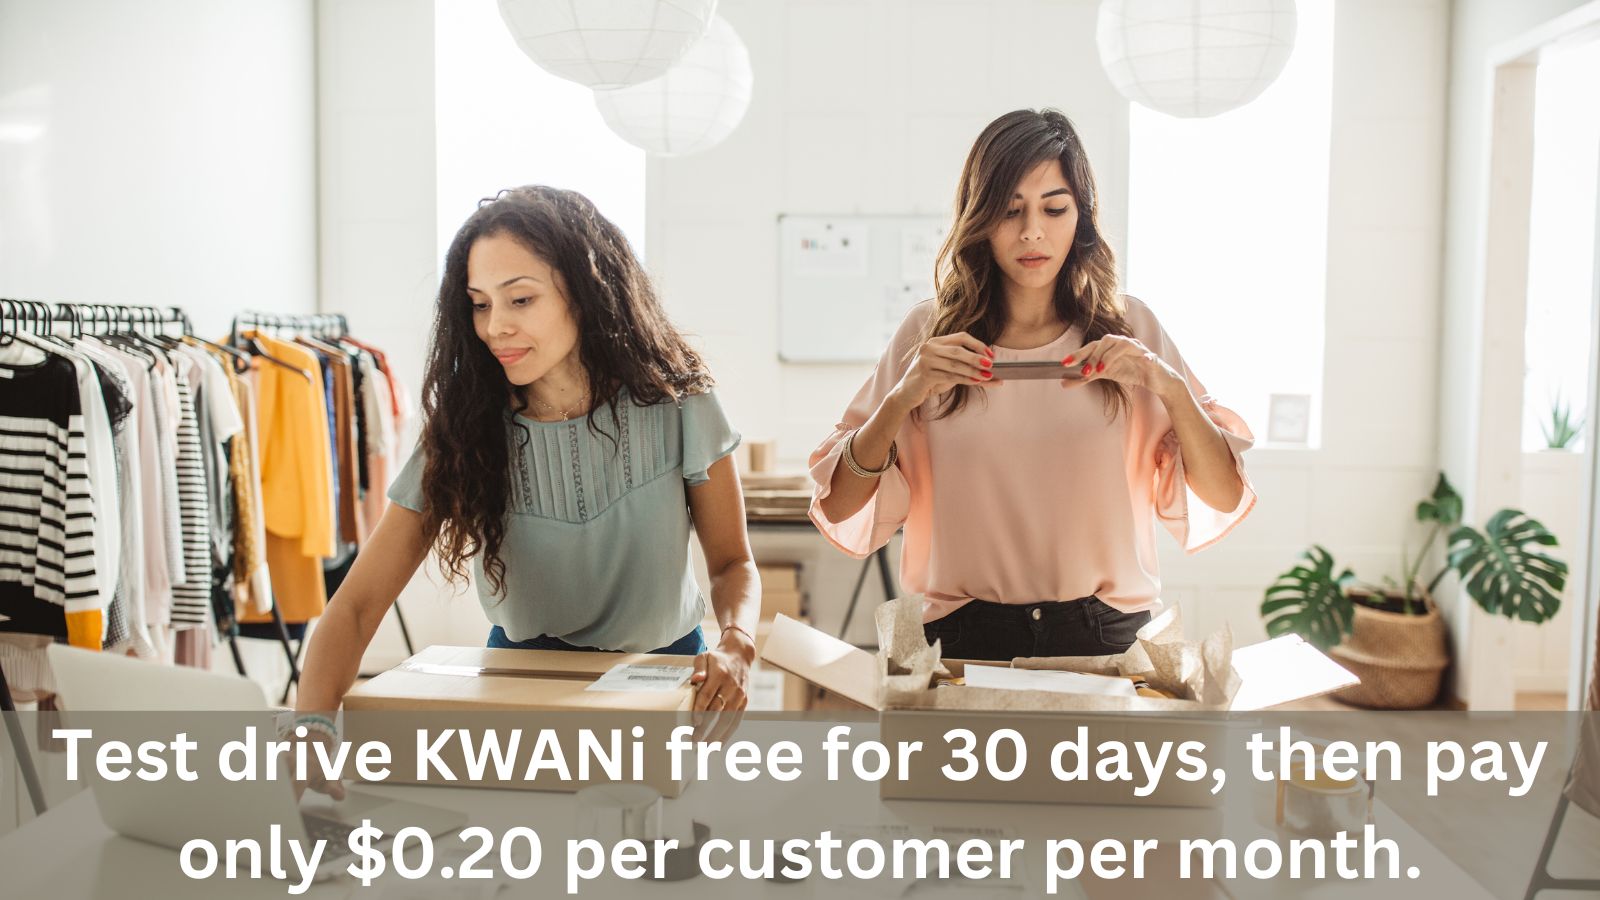 Testa KWANi i 30 dagar sedan betala 0,20 dollar per kund per månad